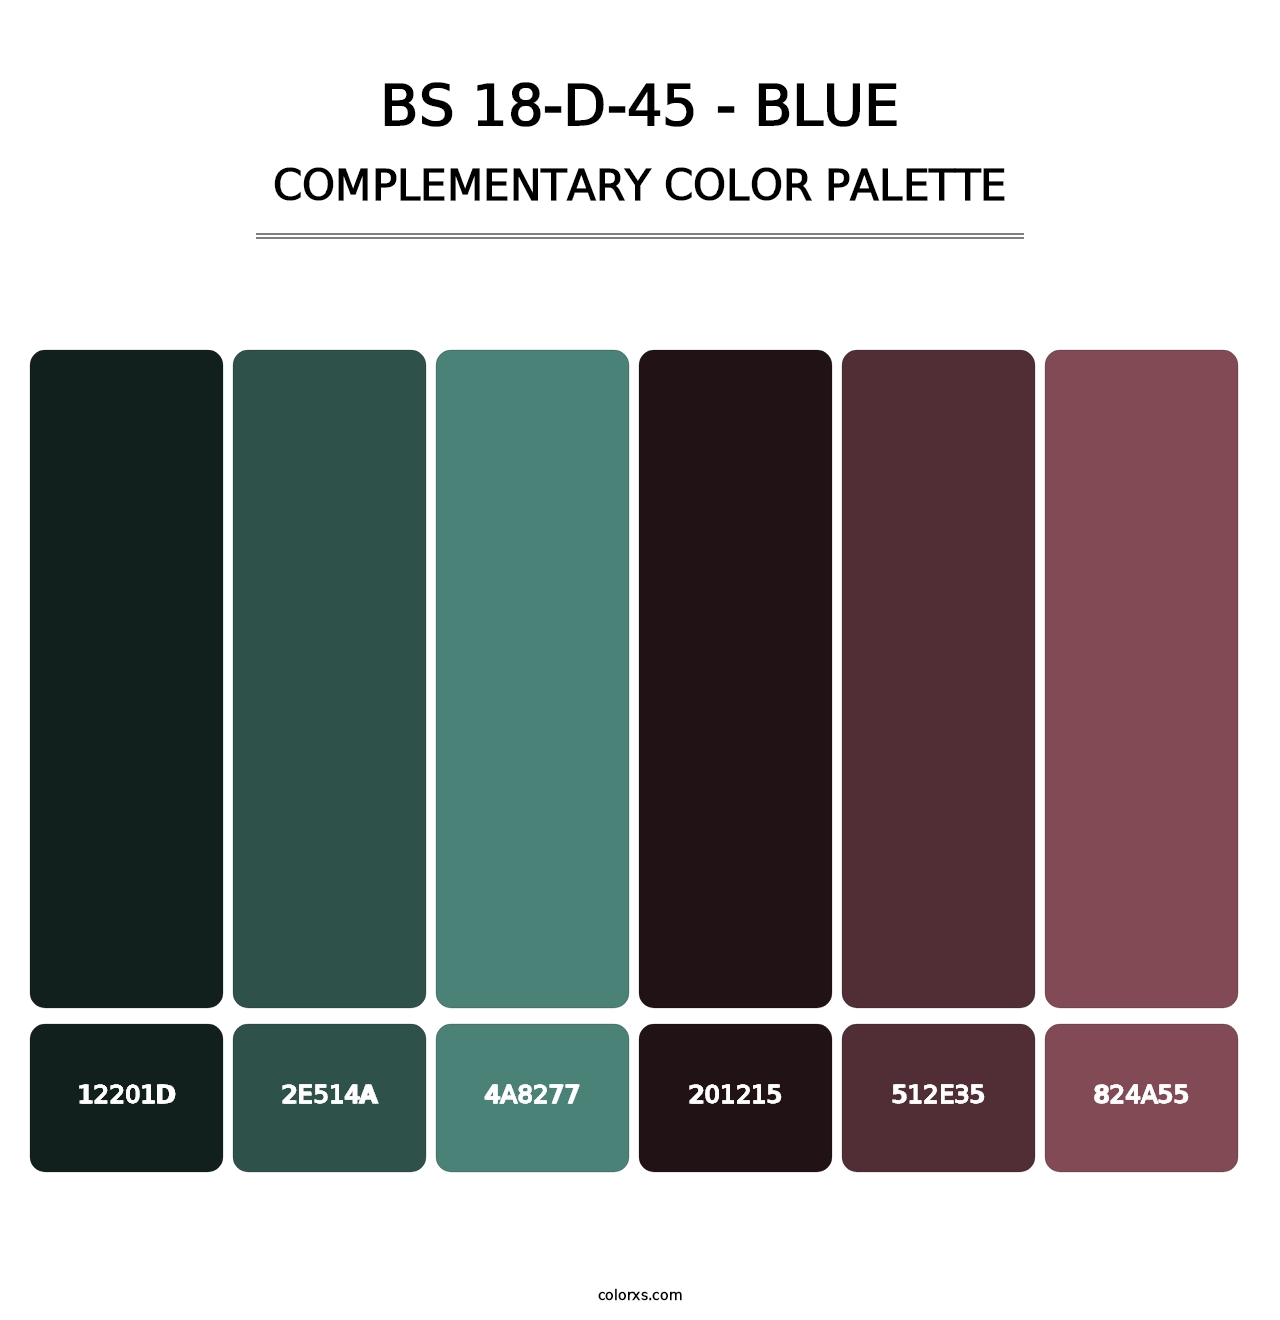 BS 18-D-45 - Blue - Complementary Color Palette